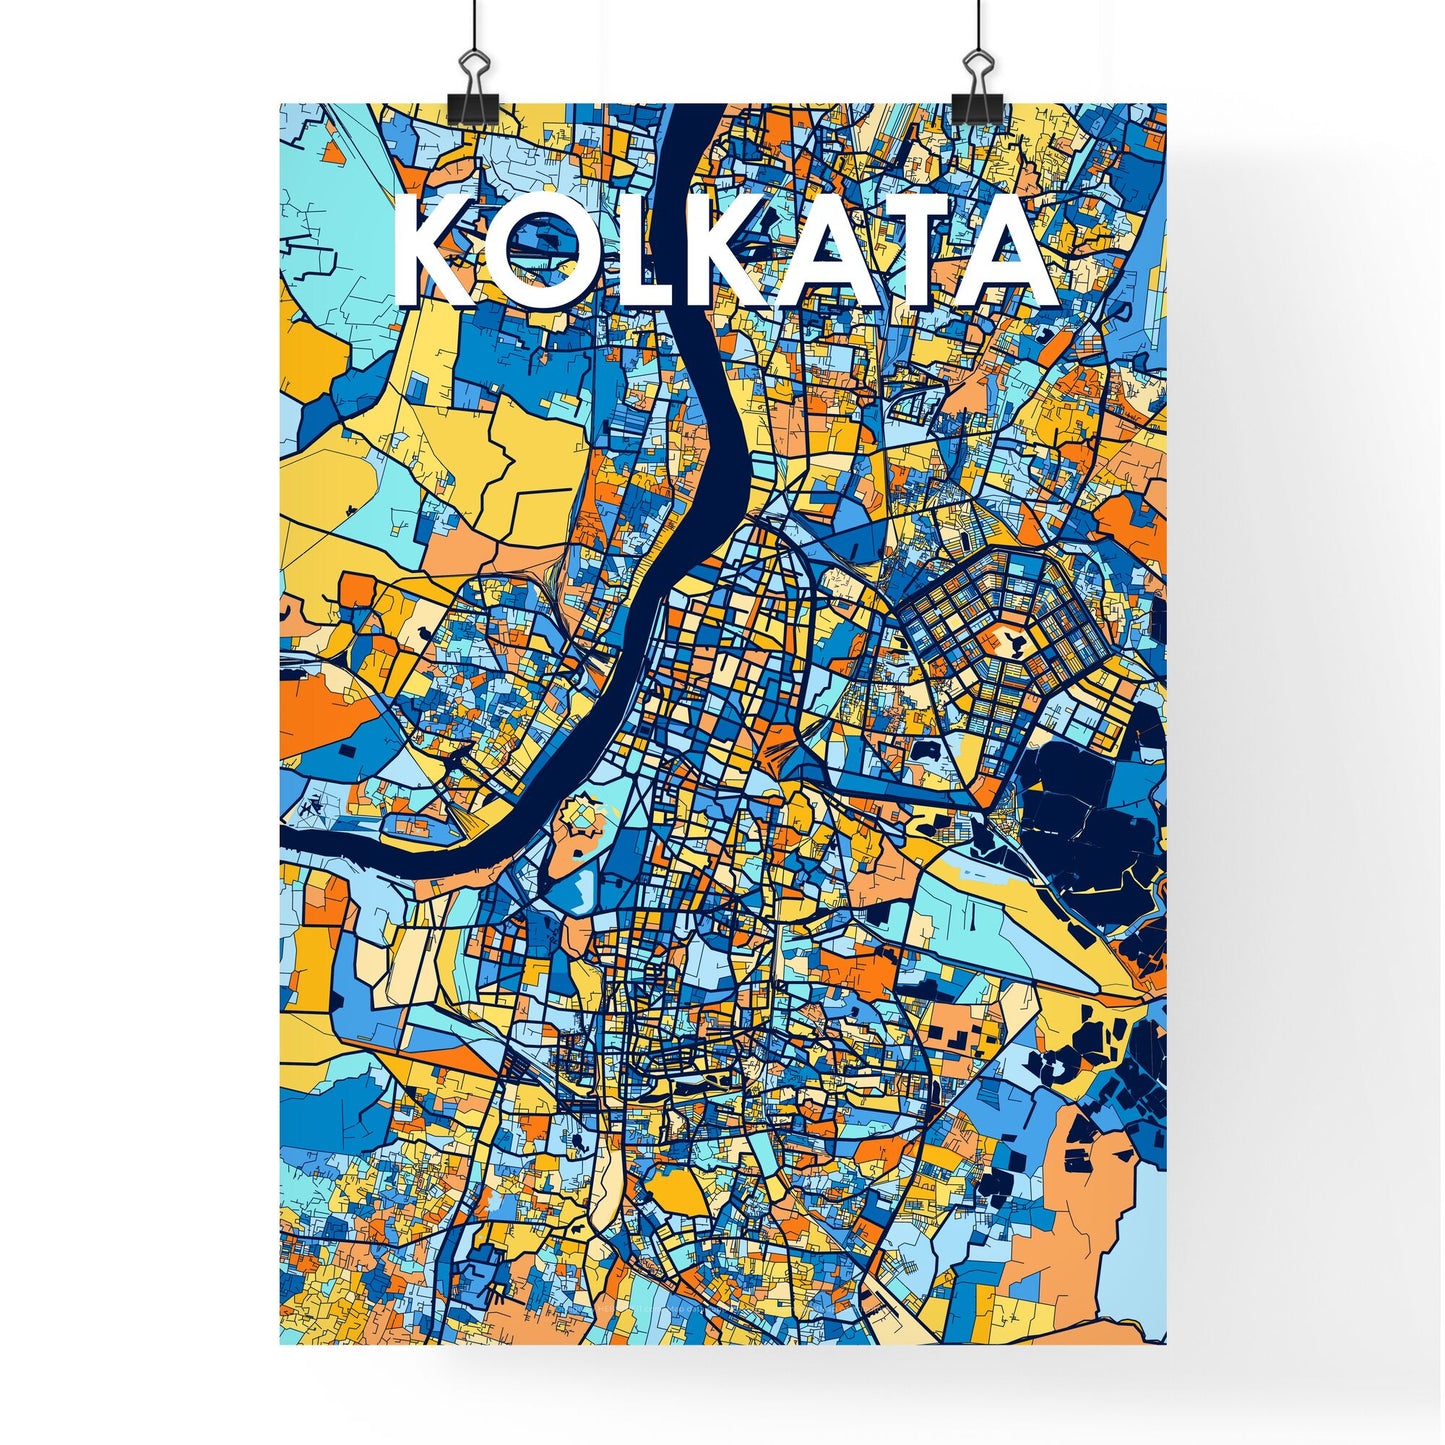 KOLKATA INDIA Vibrant Colorful Art Map Poster Blue Orange